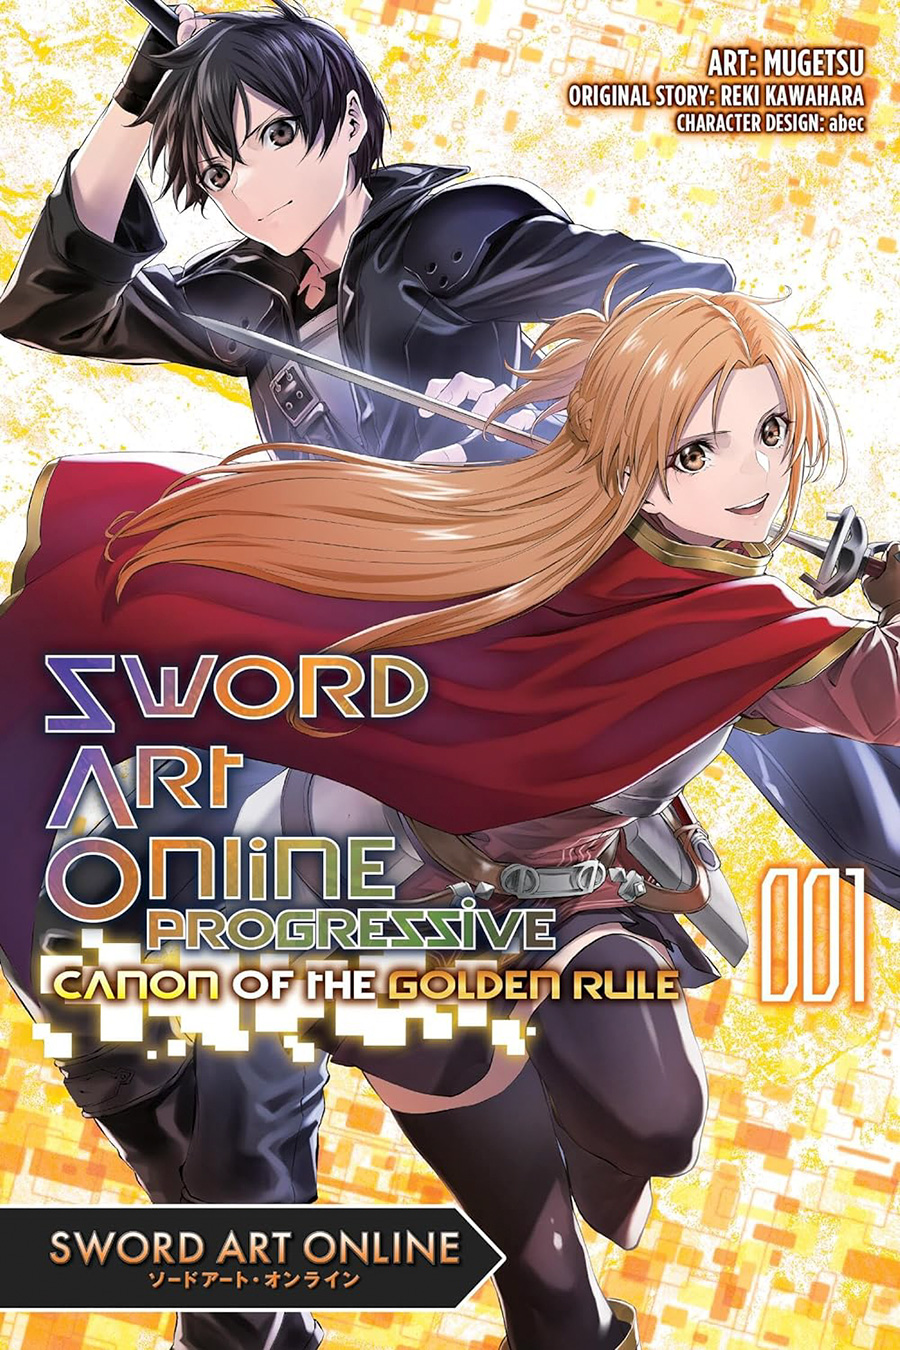 Sword Art Online Progressive Canon Of The Golden Rule Vol 1 GN